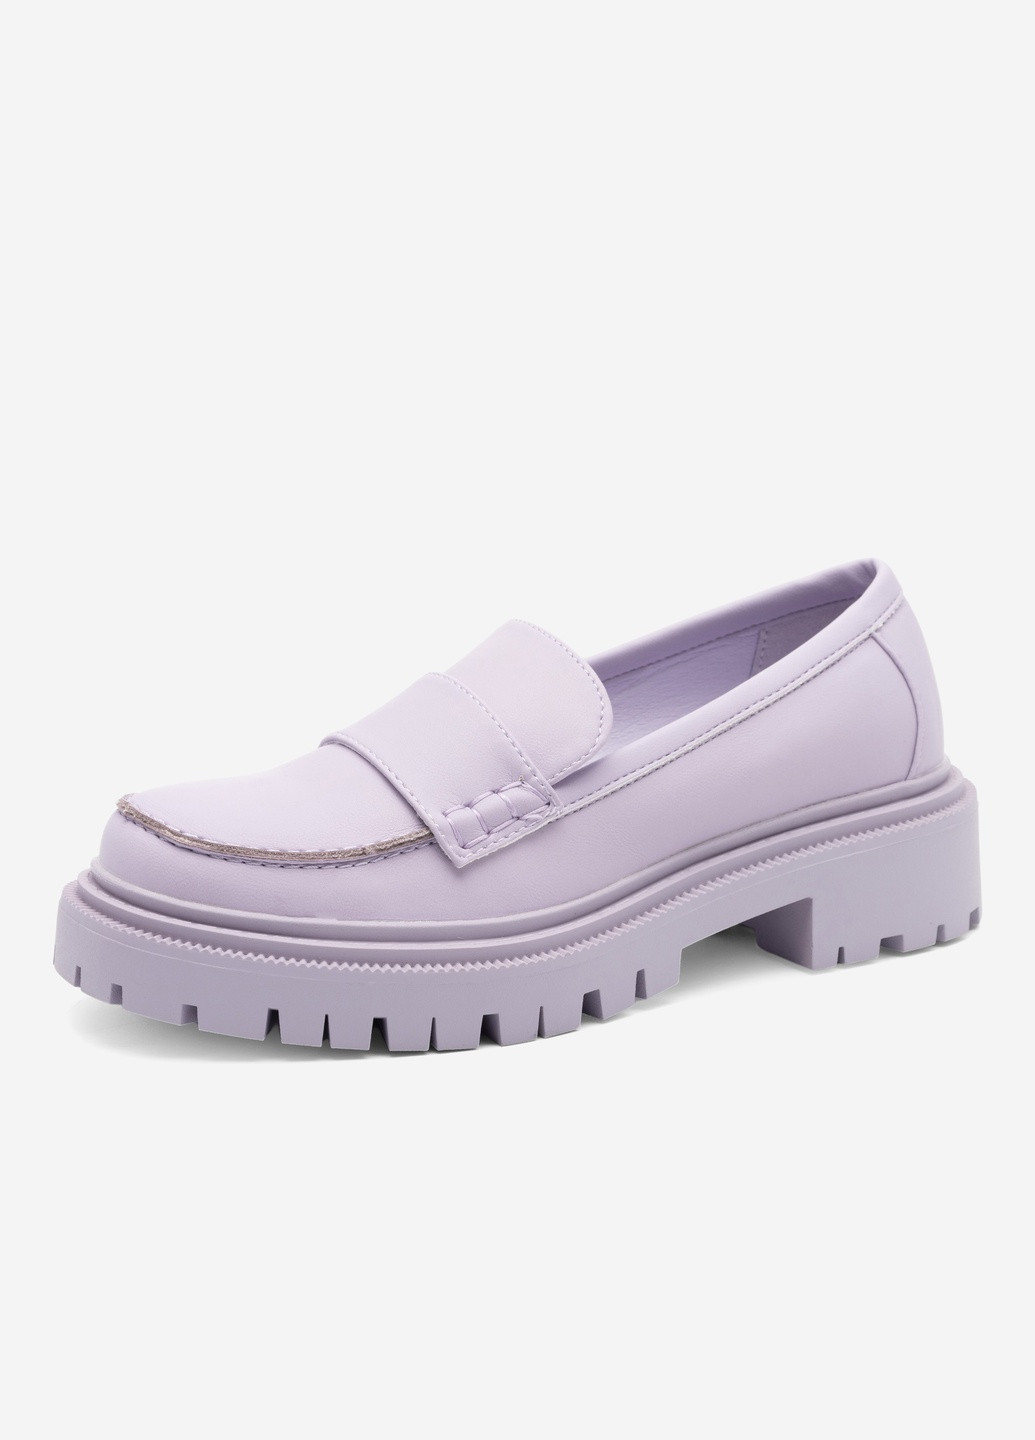 Фиолетовые осенние туфли martha hy0102-xx Jenny Fairy